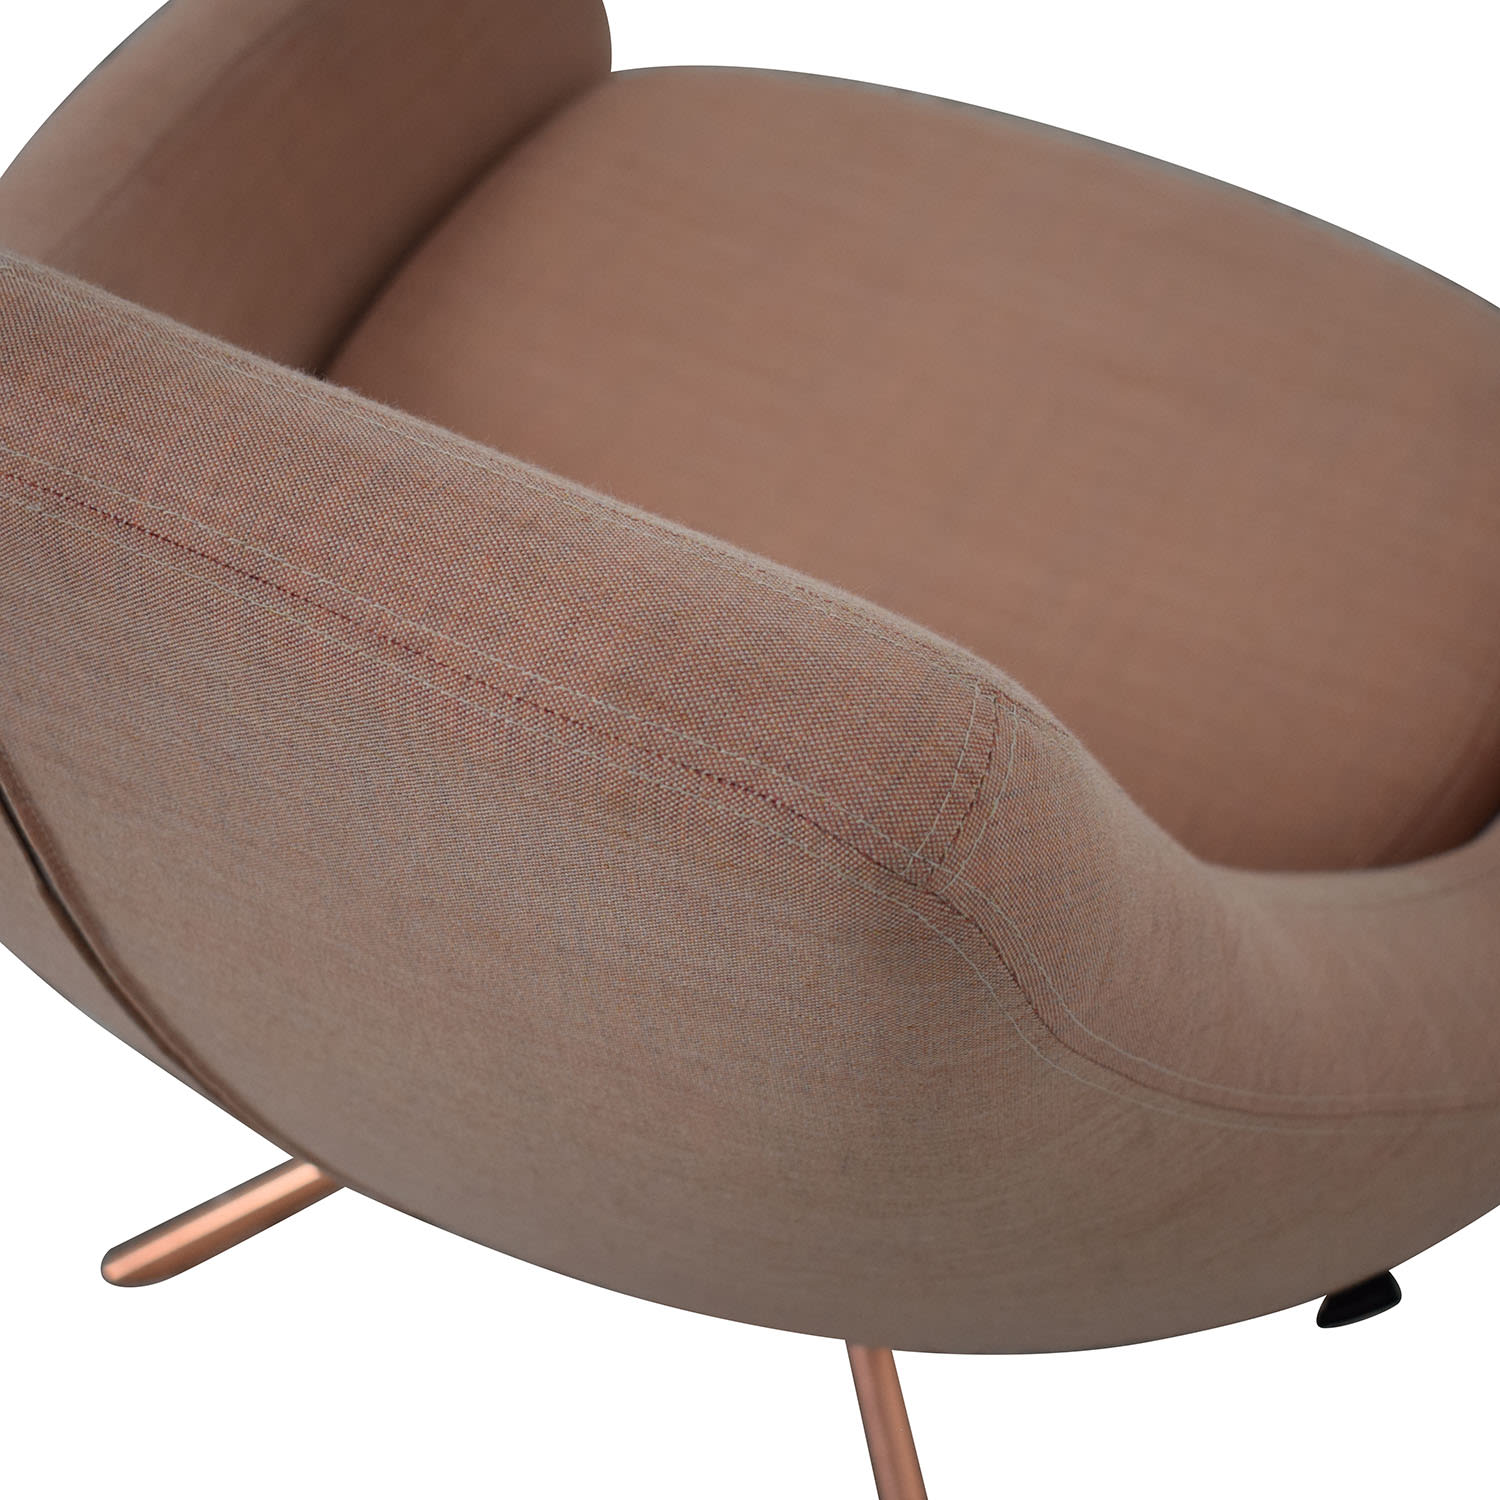 NOOMI Chaise Pivotante » SOFTLINE Furniture